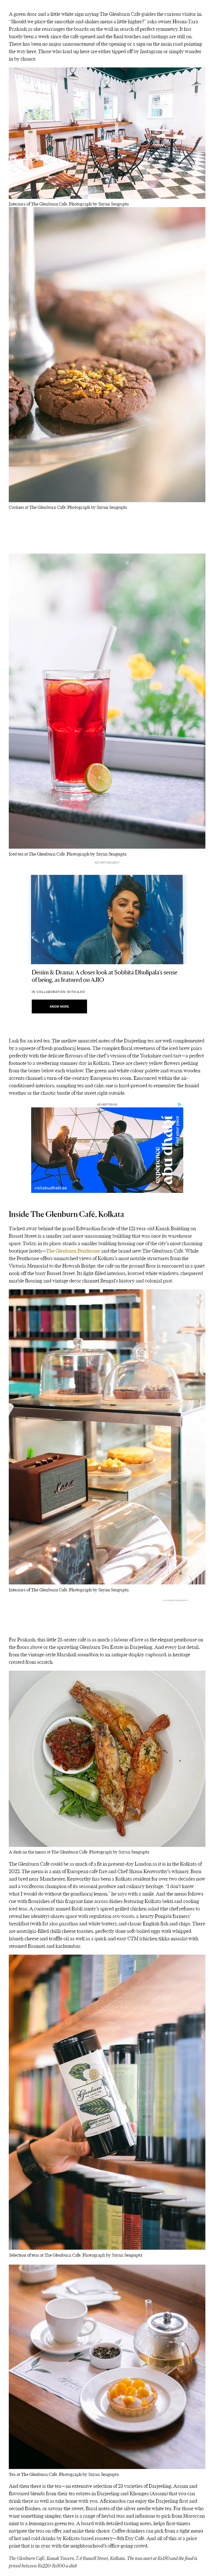 New in Kolkata: The Glenburn Café offers tea, toasties and vintage elegance